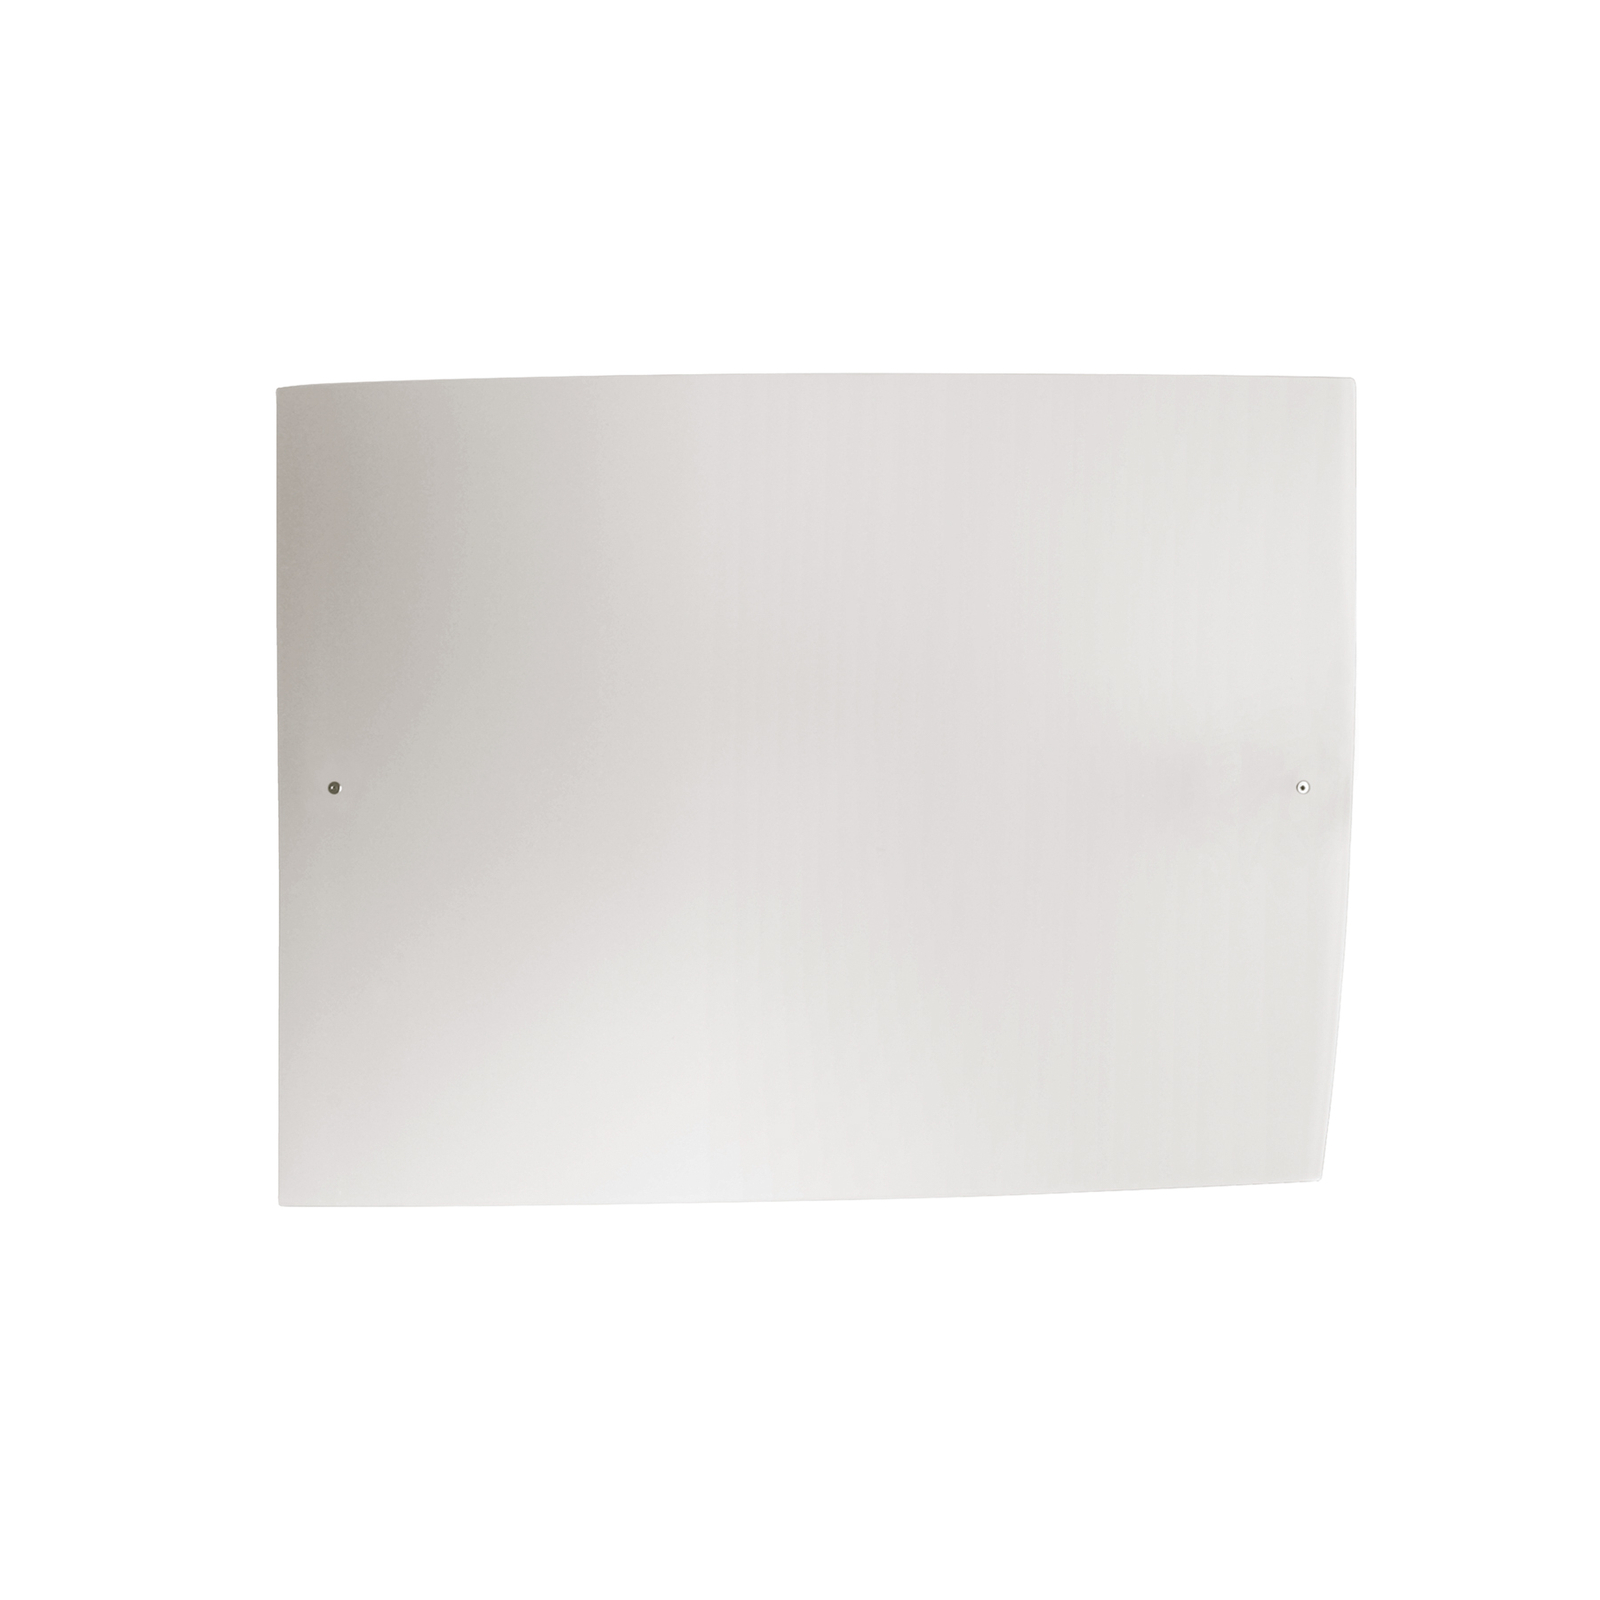 Foscarini Folio grande wall light, white